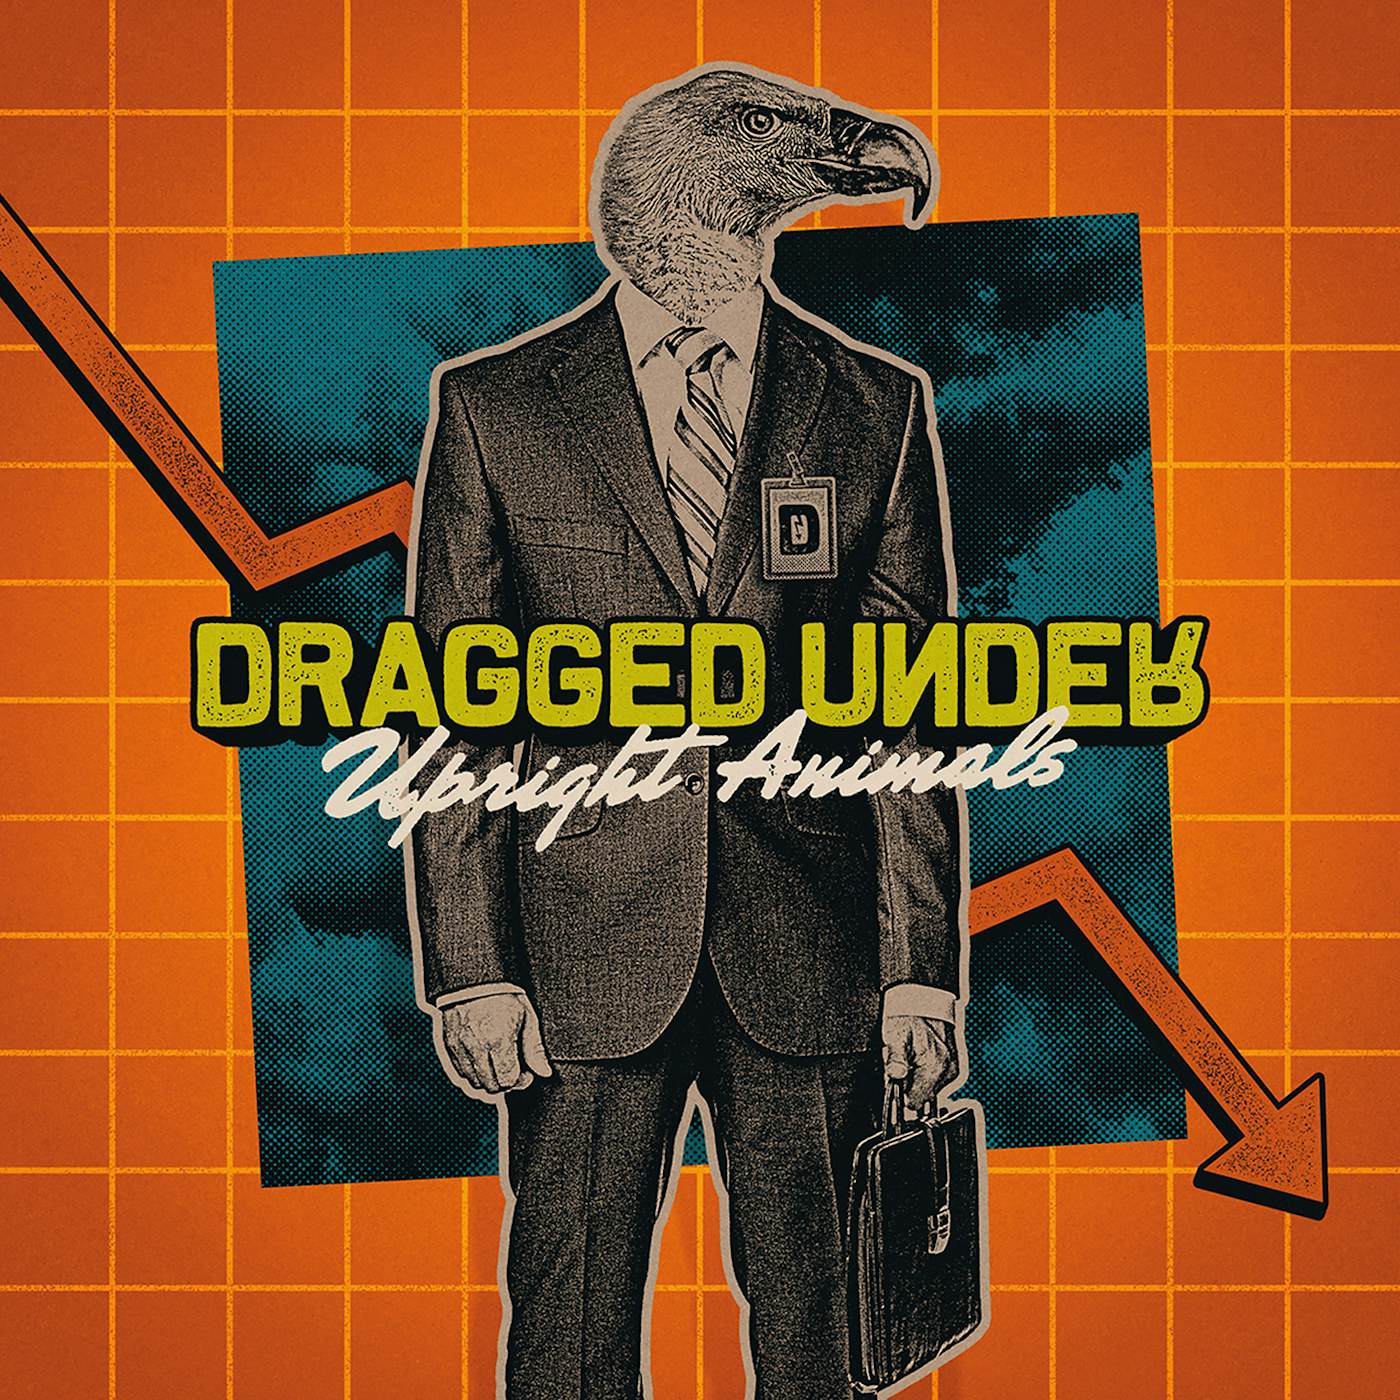 Dragged Under UPRIGHT ANIMALS CD